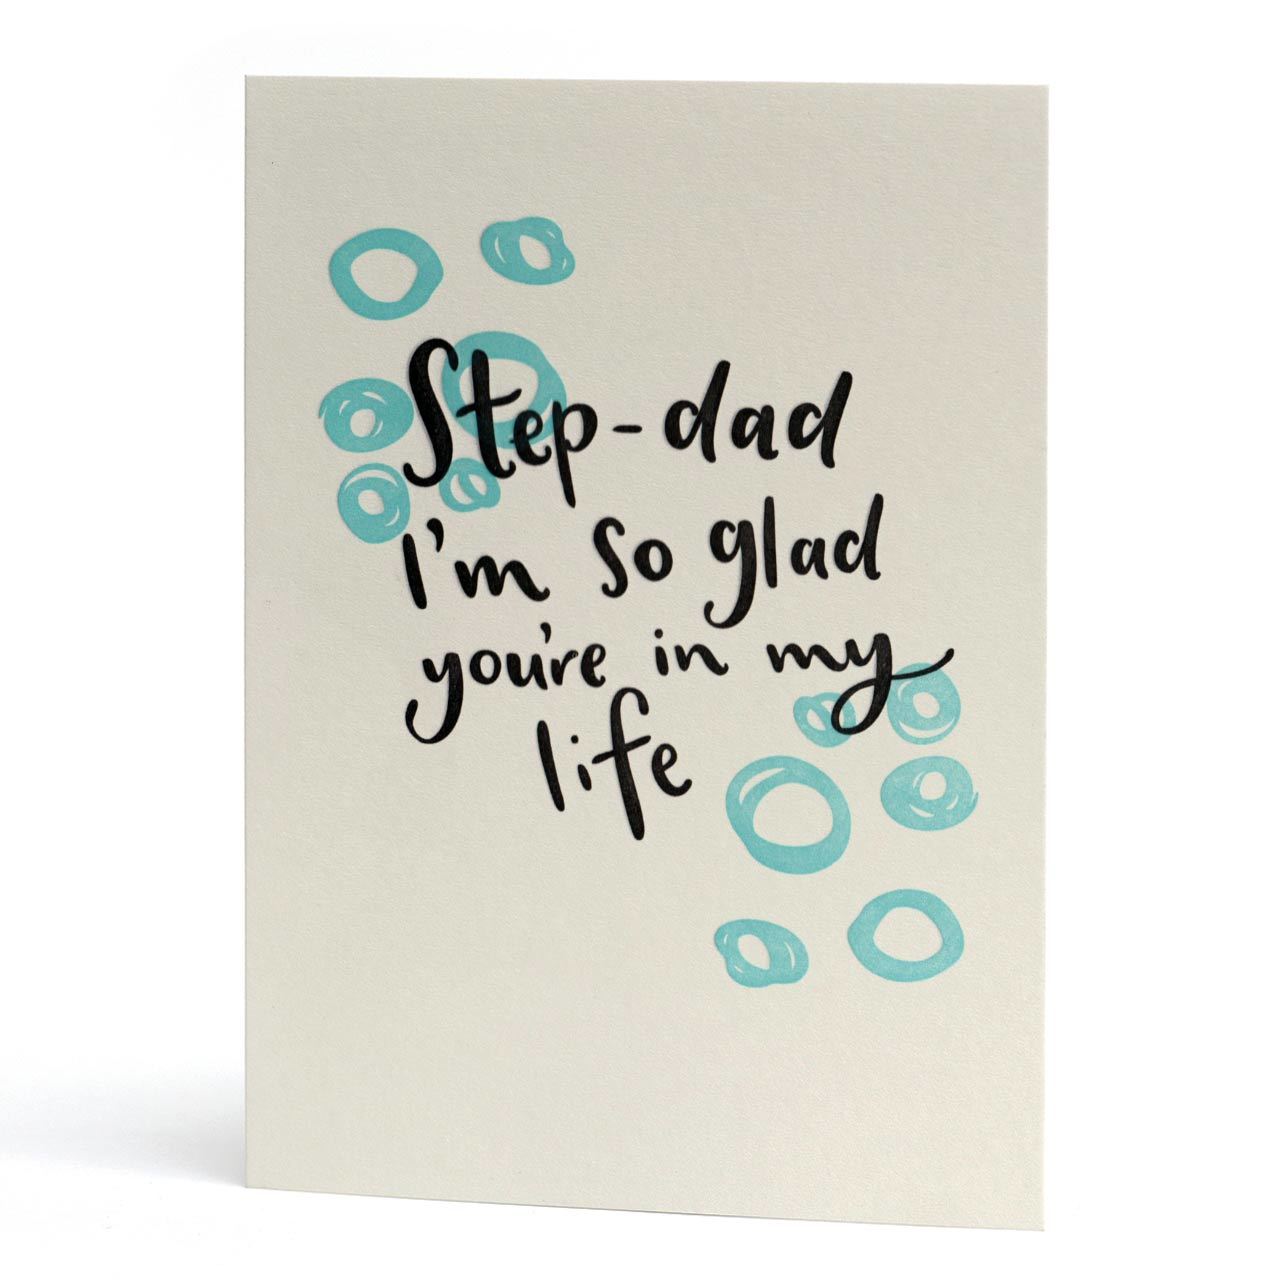 So Glad You're My Step Dad Letterpress Card